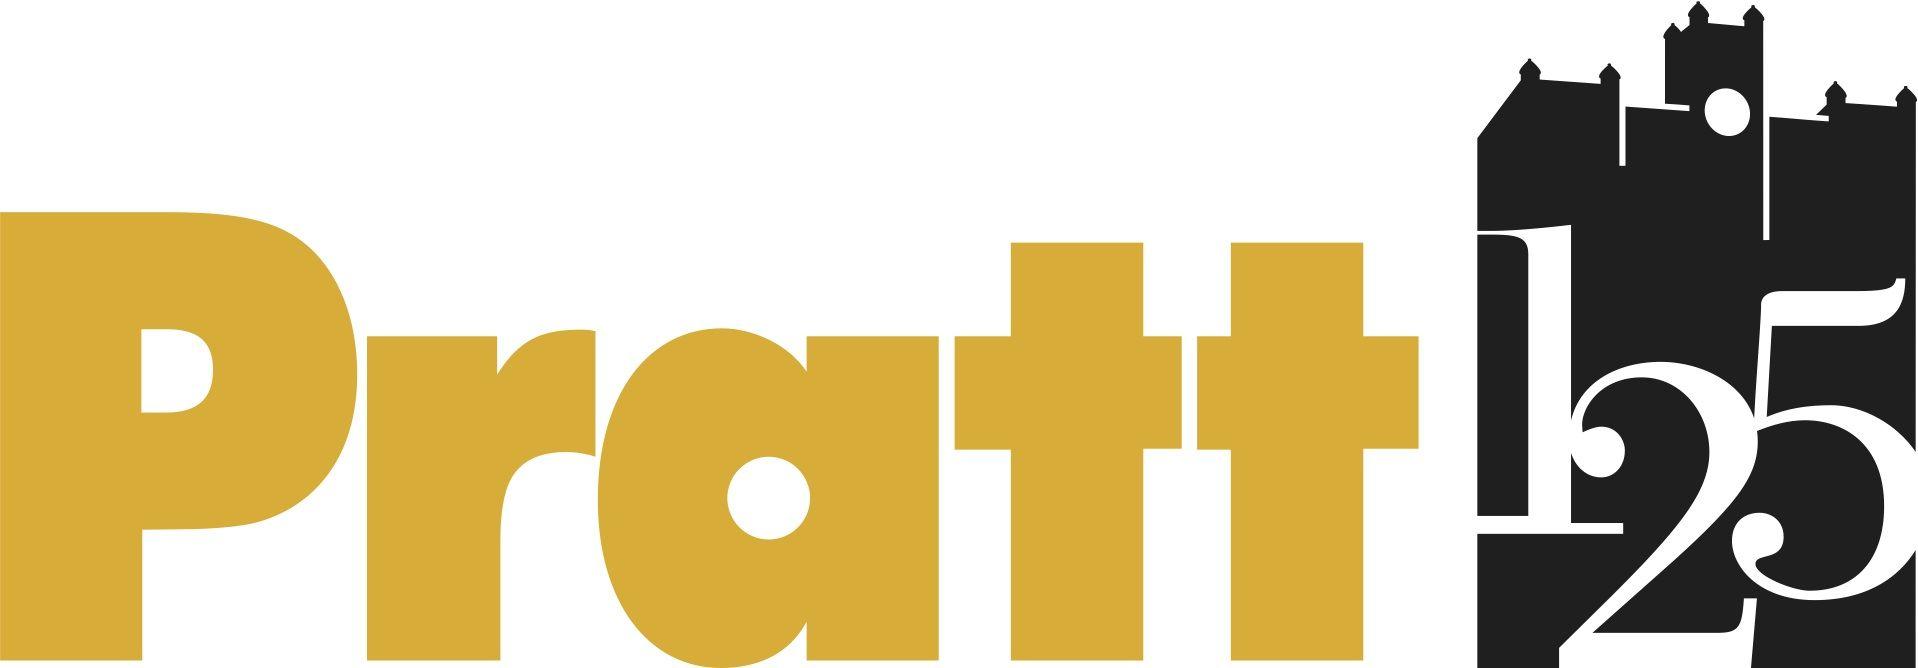 Pratt Institute Logo - 2012 Climate Leadership Award Winners | Advancing Education for ...